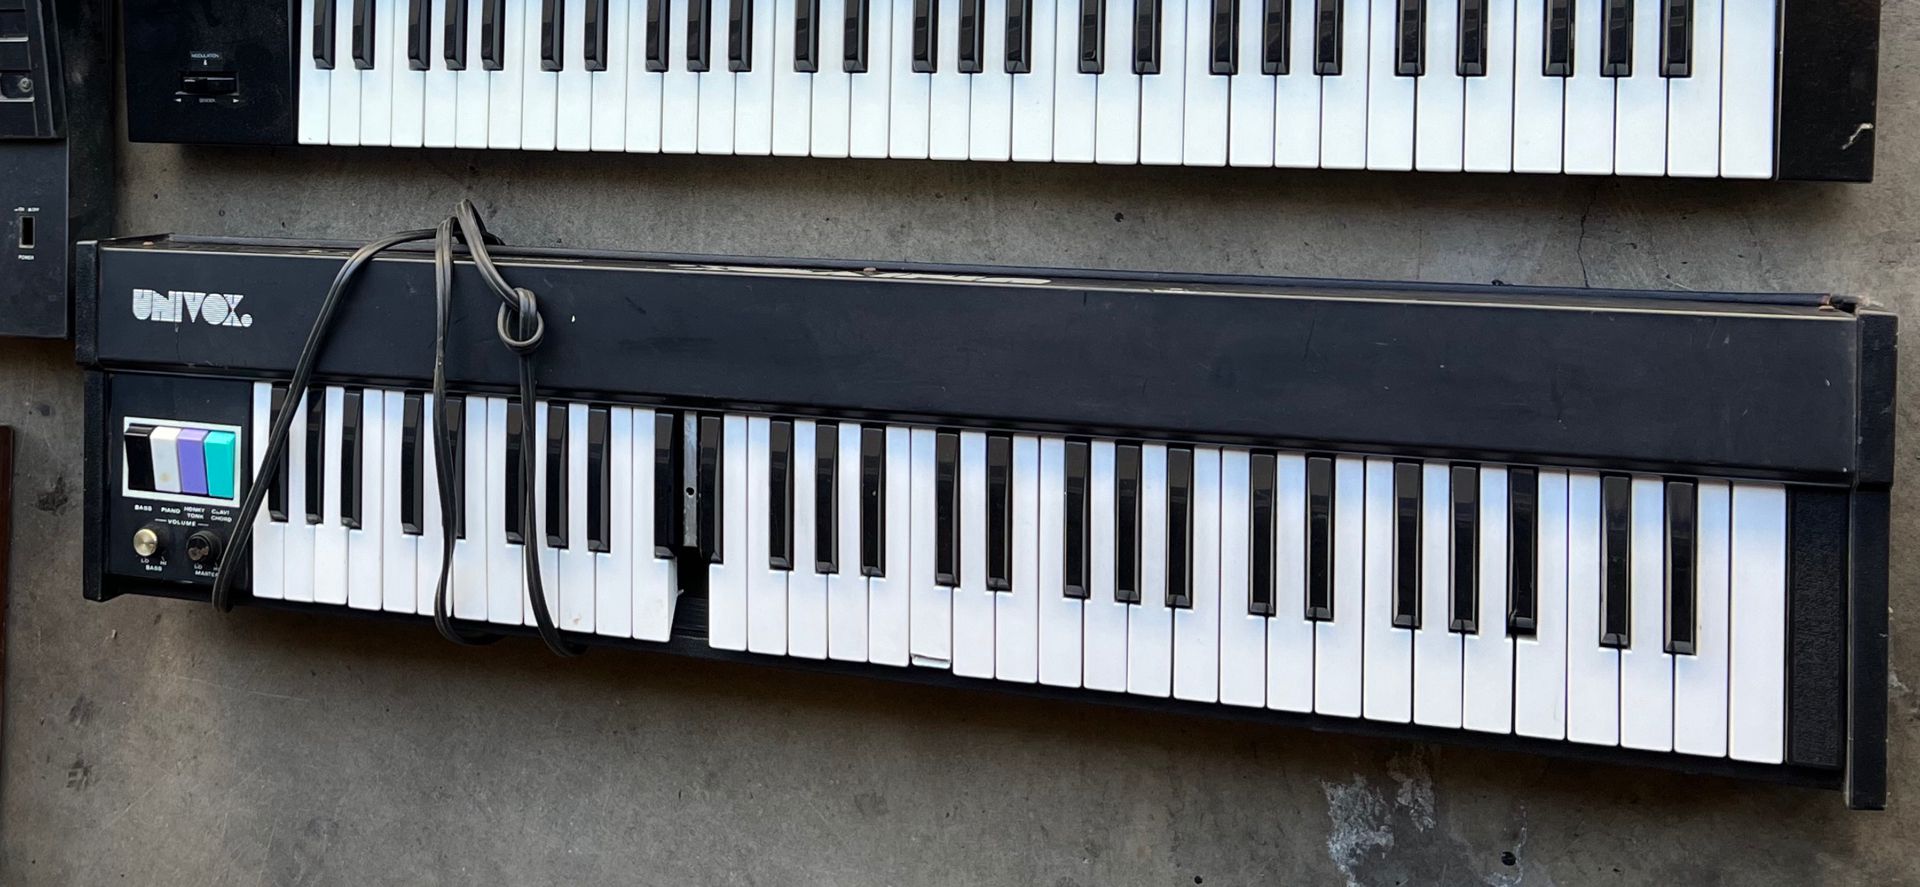 Univox Roadrunner Vintage Keyboard